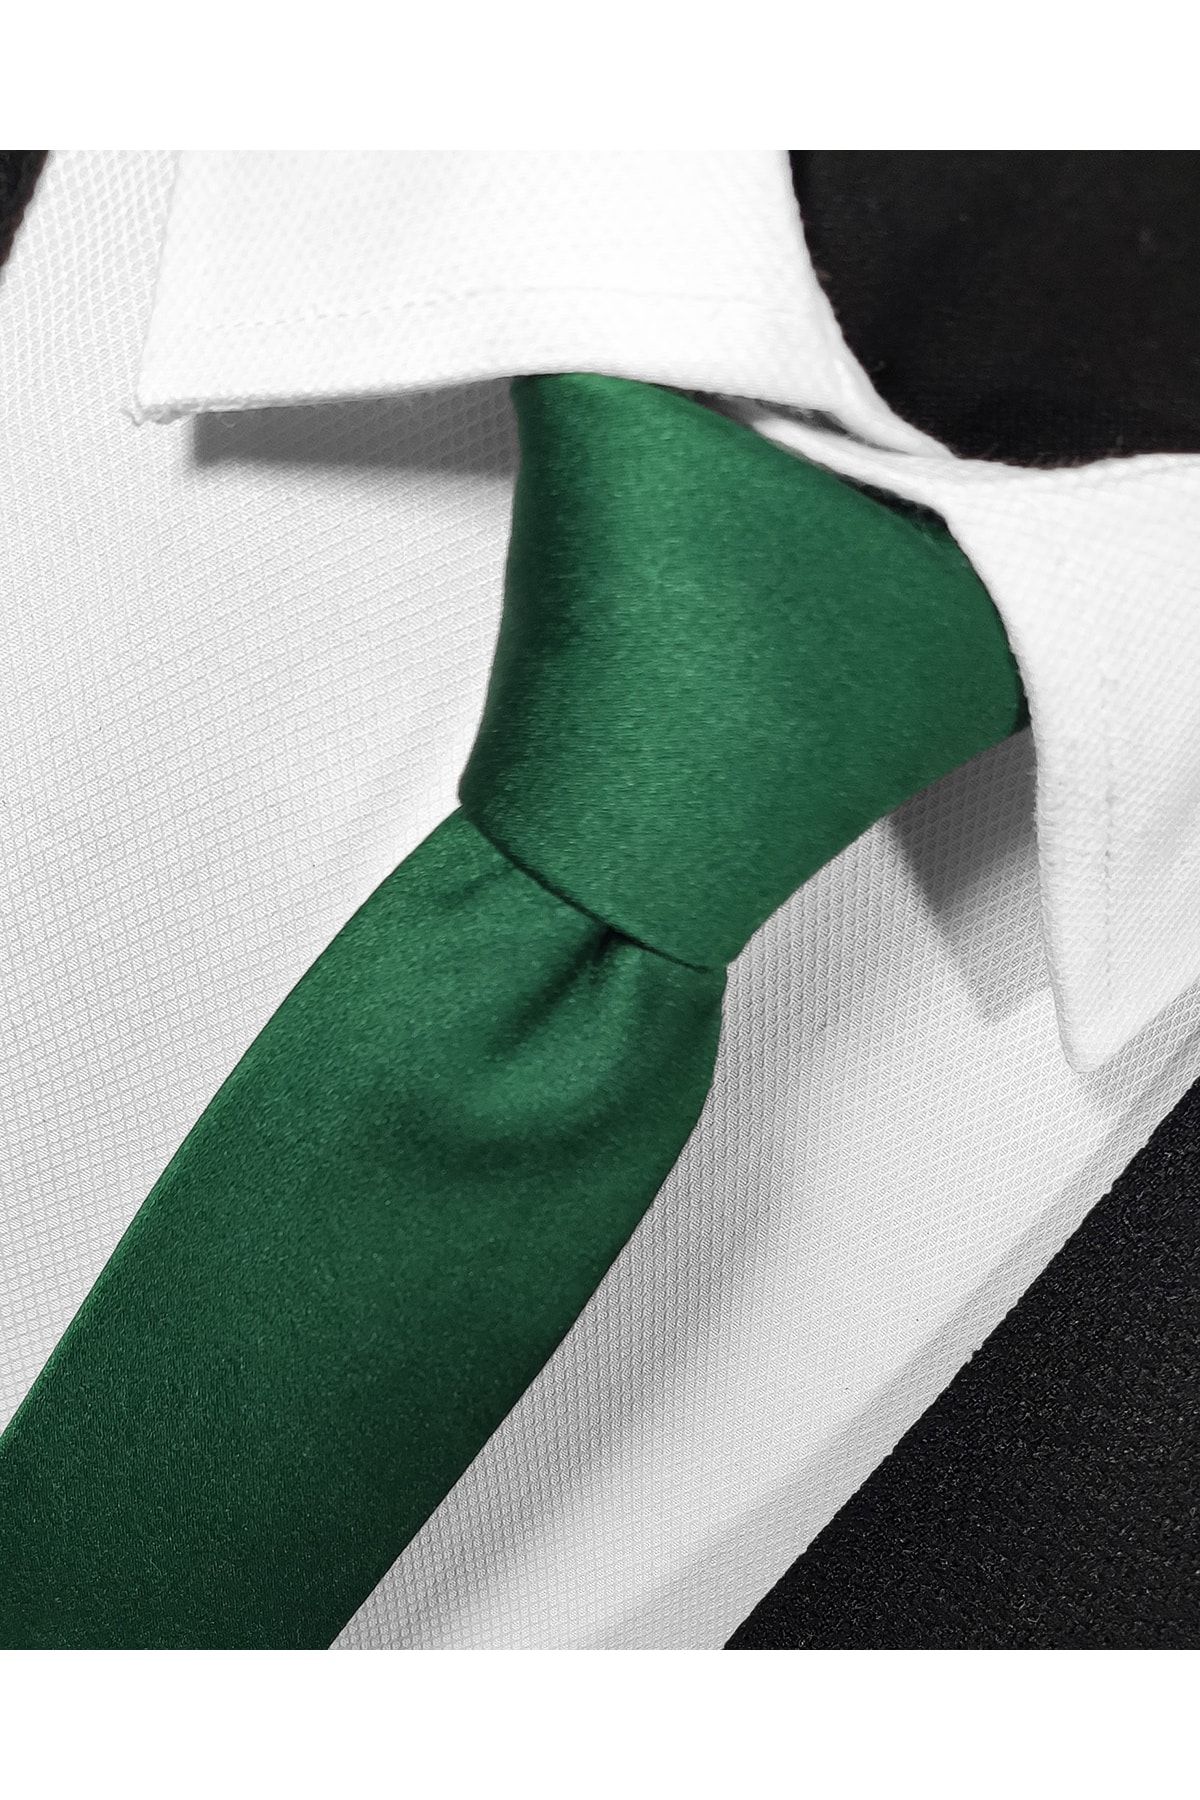 BLC Basic Line Co. Ekstra Ince Yeşil Renk Düz Slim Fit 4 Cm Genişliğinde Kravat Mendil Seti Slim Fit Dar